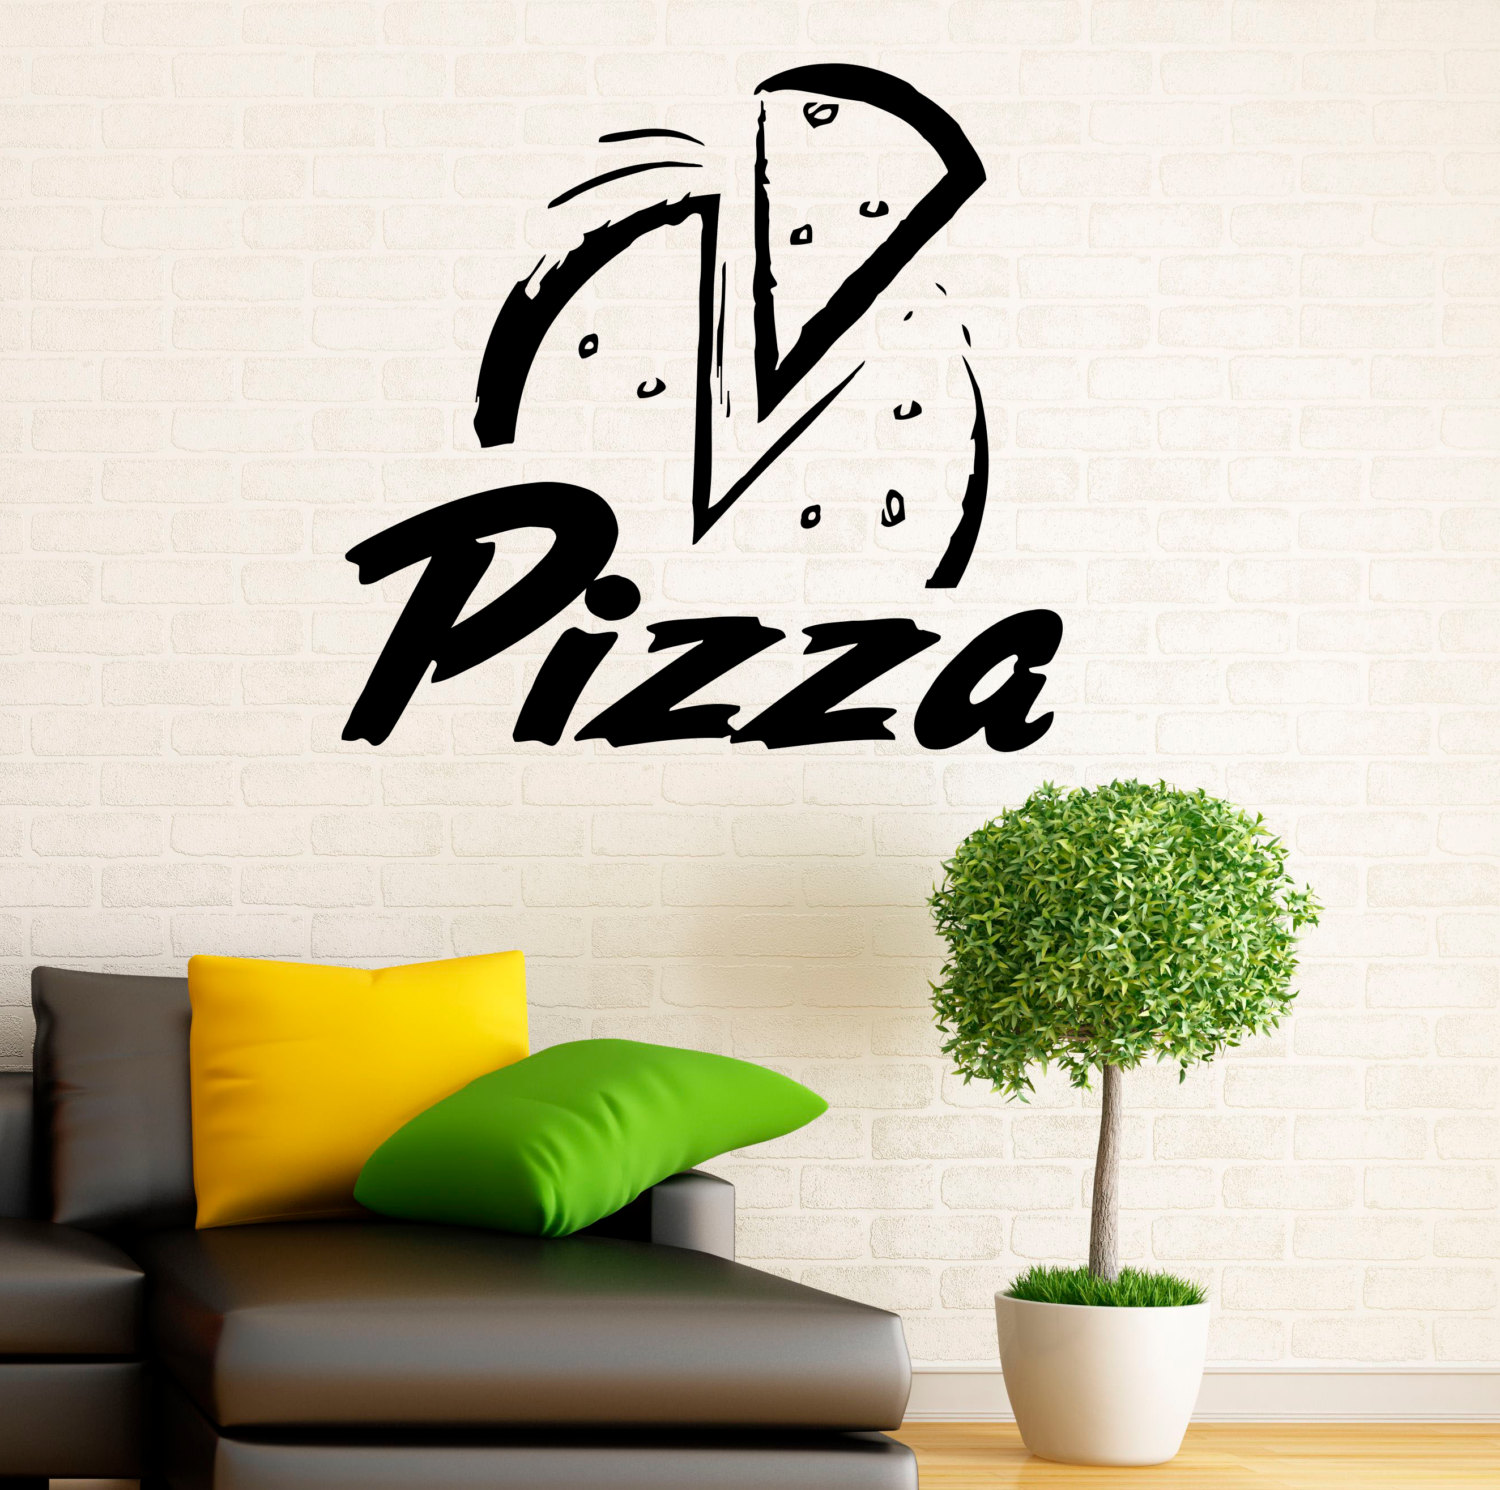 Pizzeria Wall Decal Vinyl Stickers Pizza Restaurant Interior